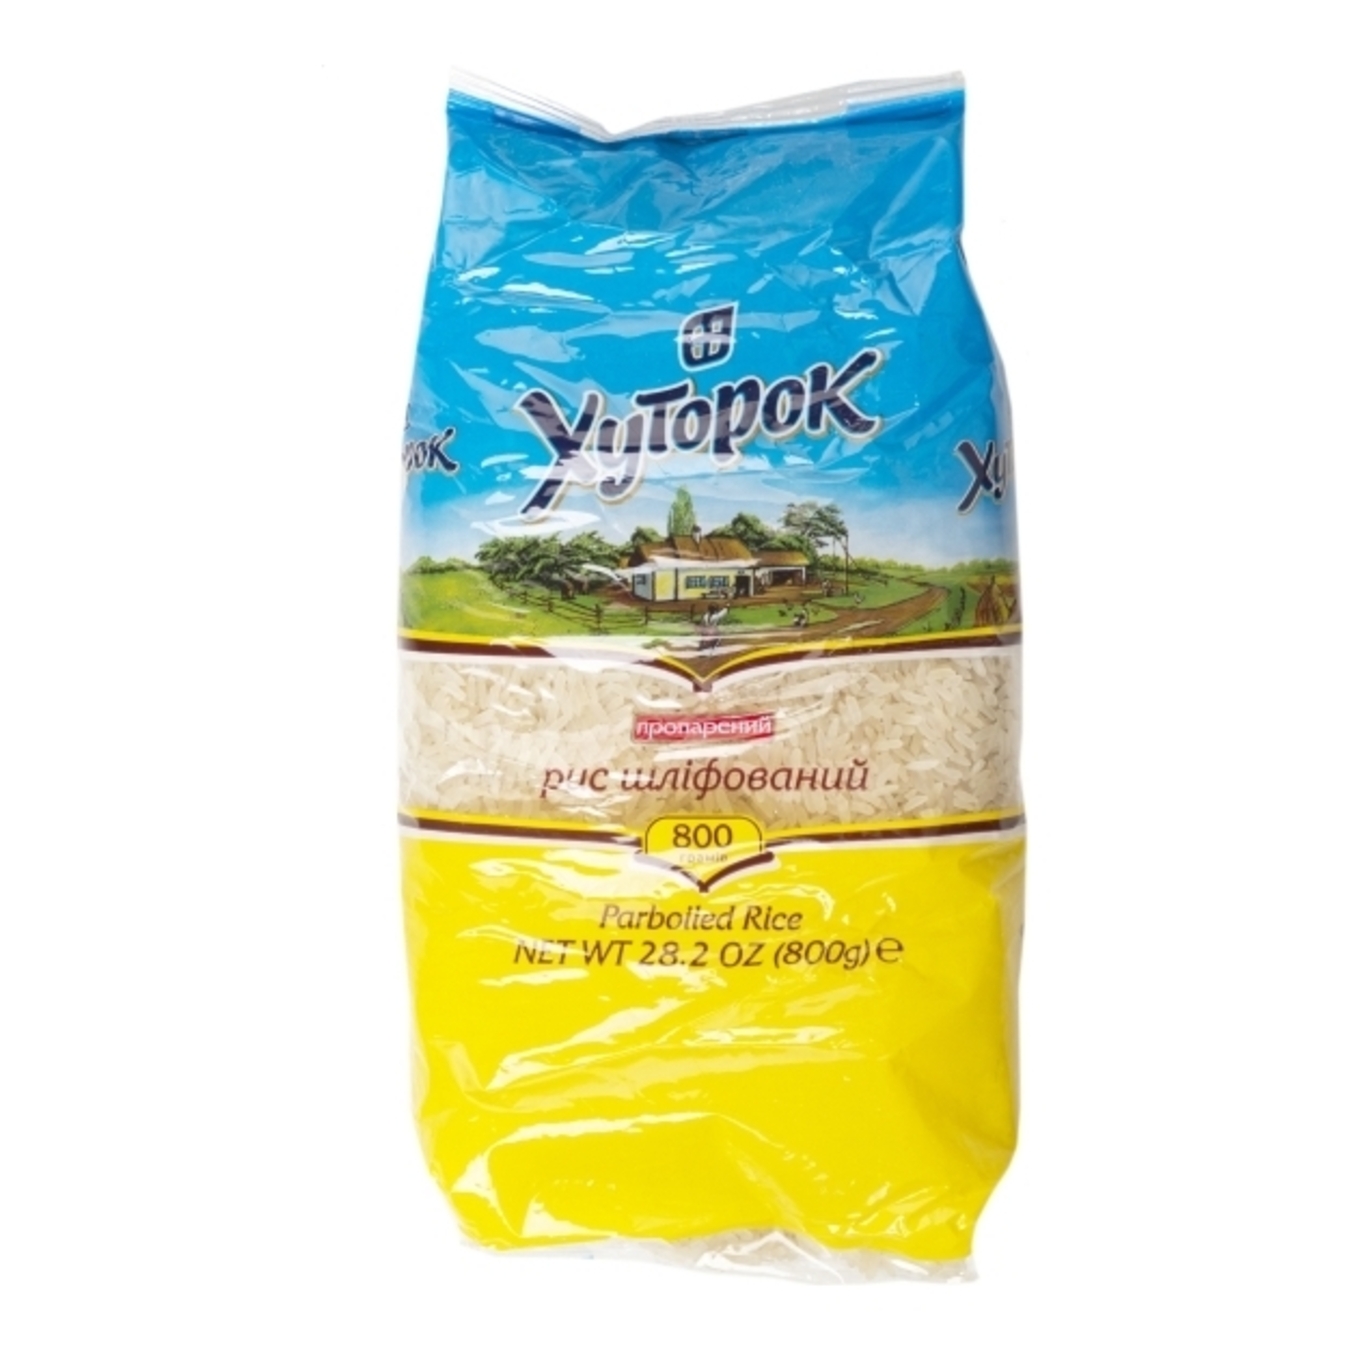 Khutorok Long Grain Parboiled Rice 800g